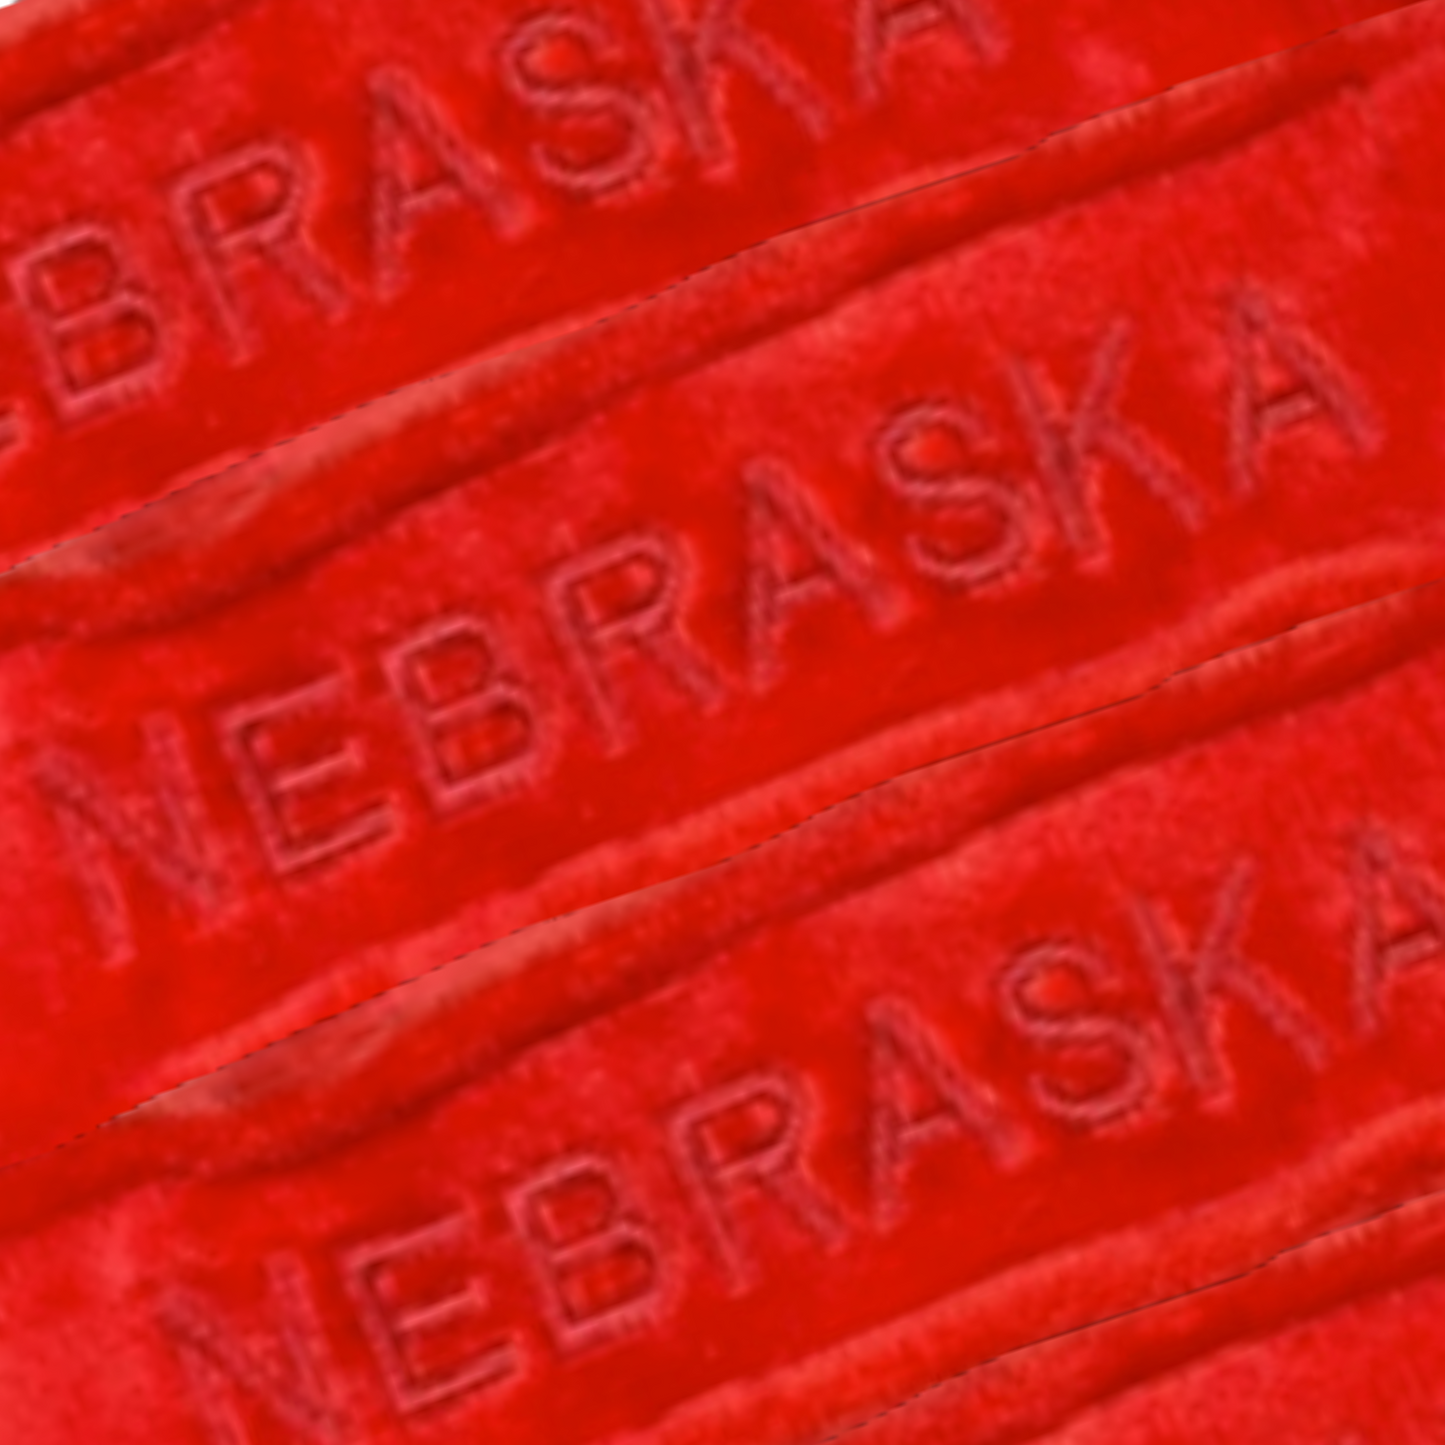 Nebraska State Stuffed Plush